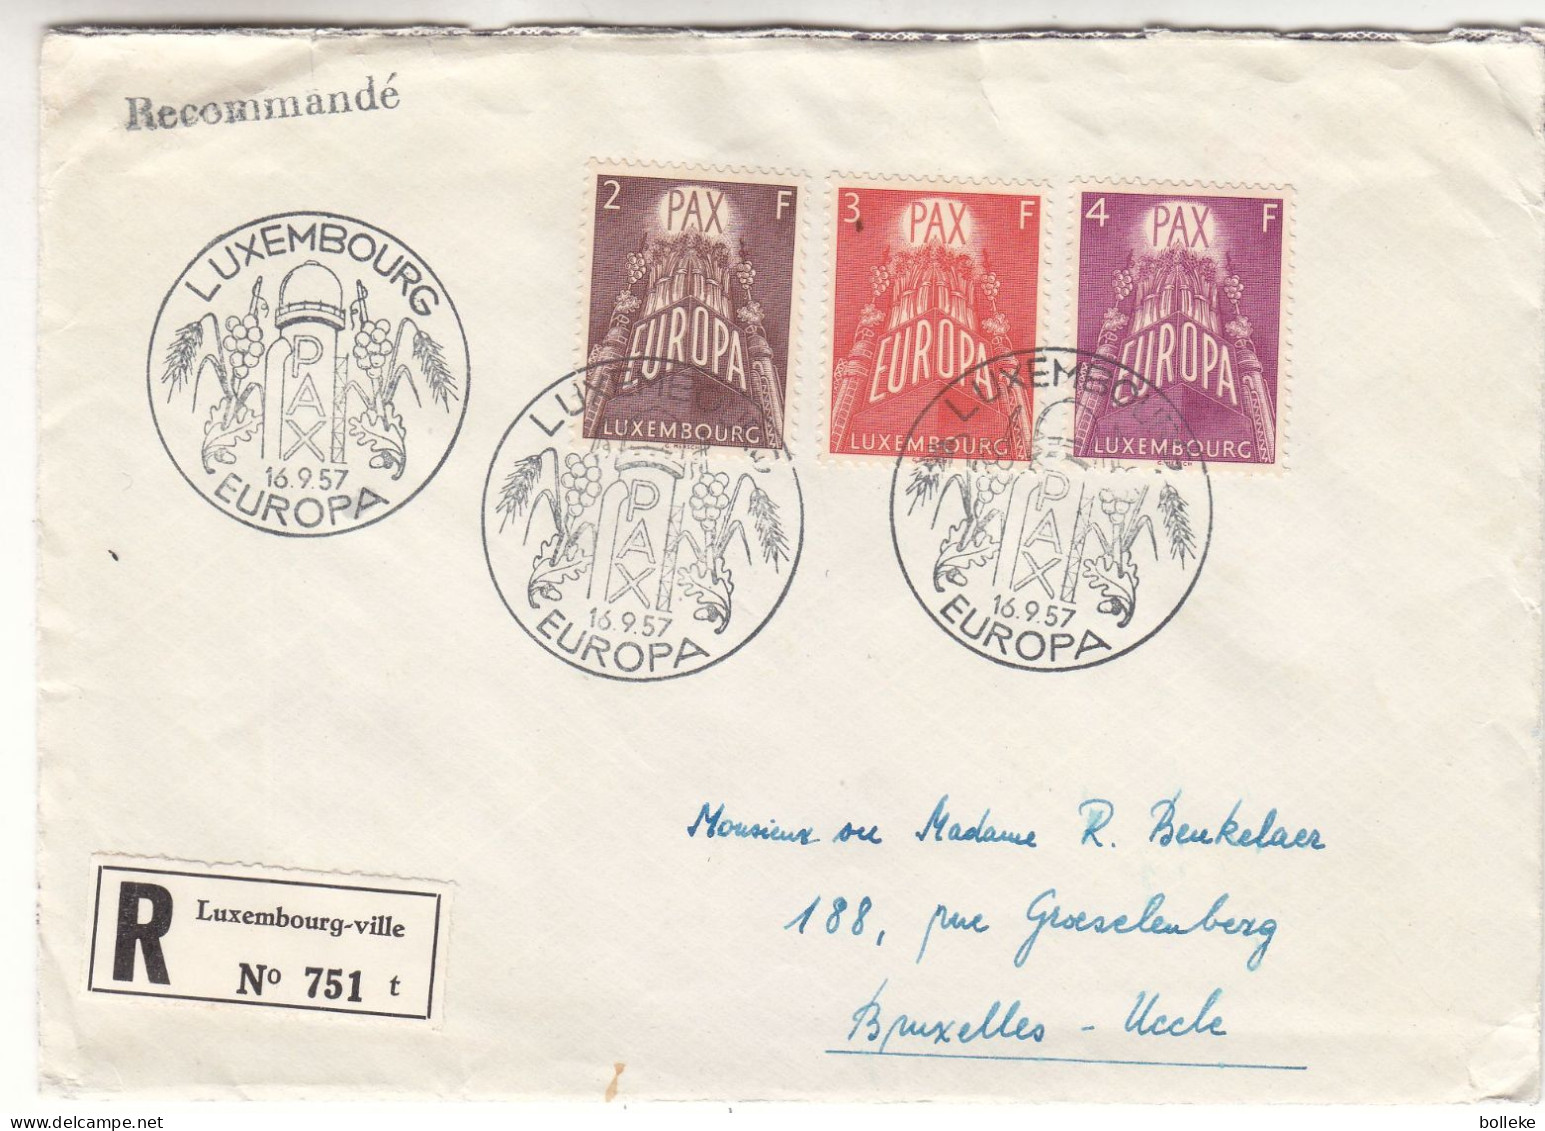 Luxembourg - Lettre FDC Recom De 1957 - Oblit Luxembourg - Europa 57 -  Valeur 75 Euros - Brieven En Documenten